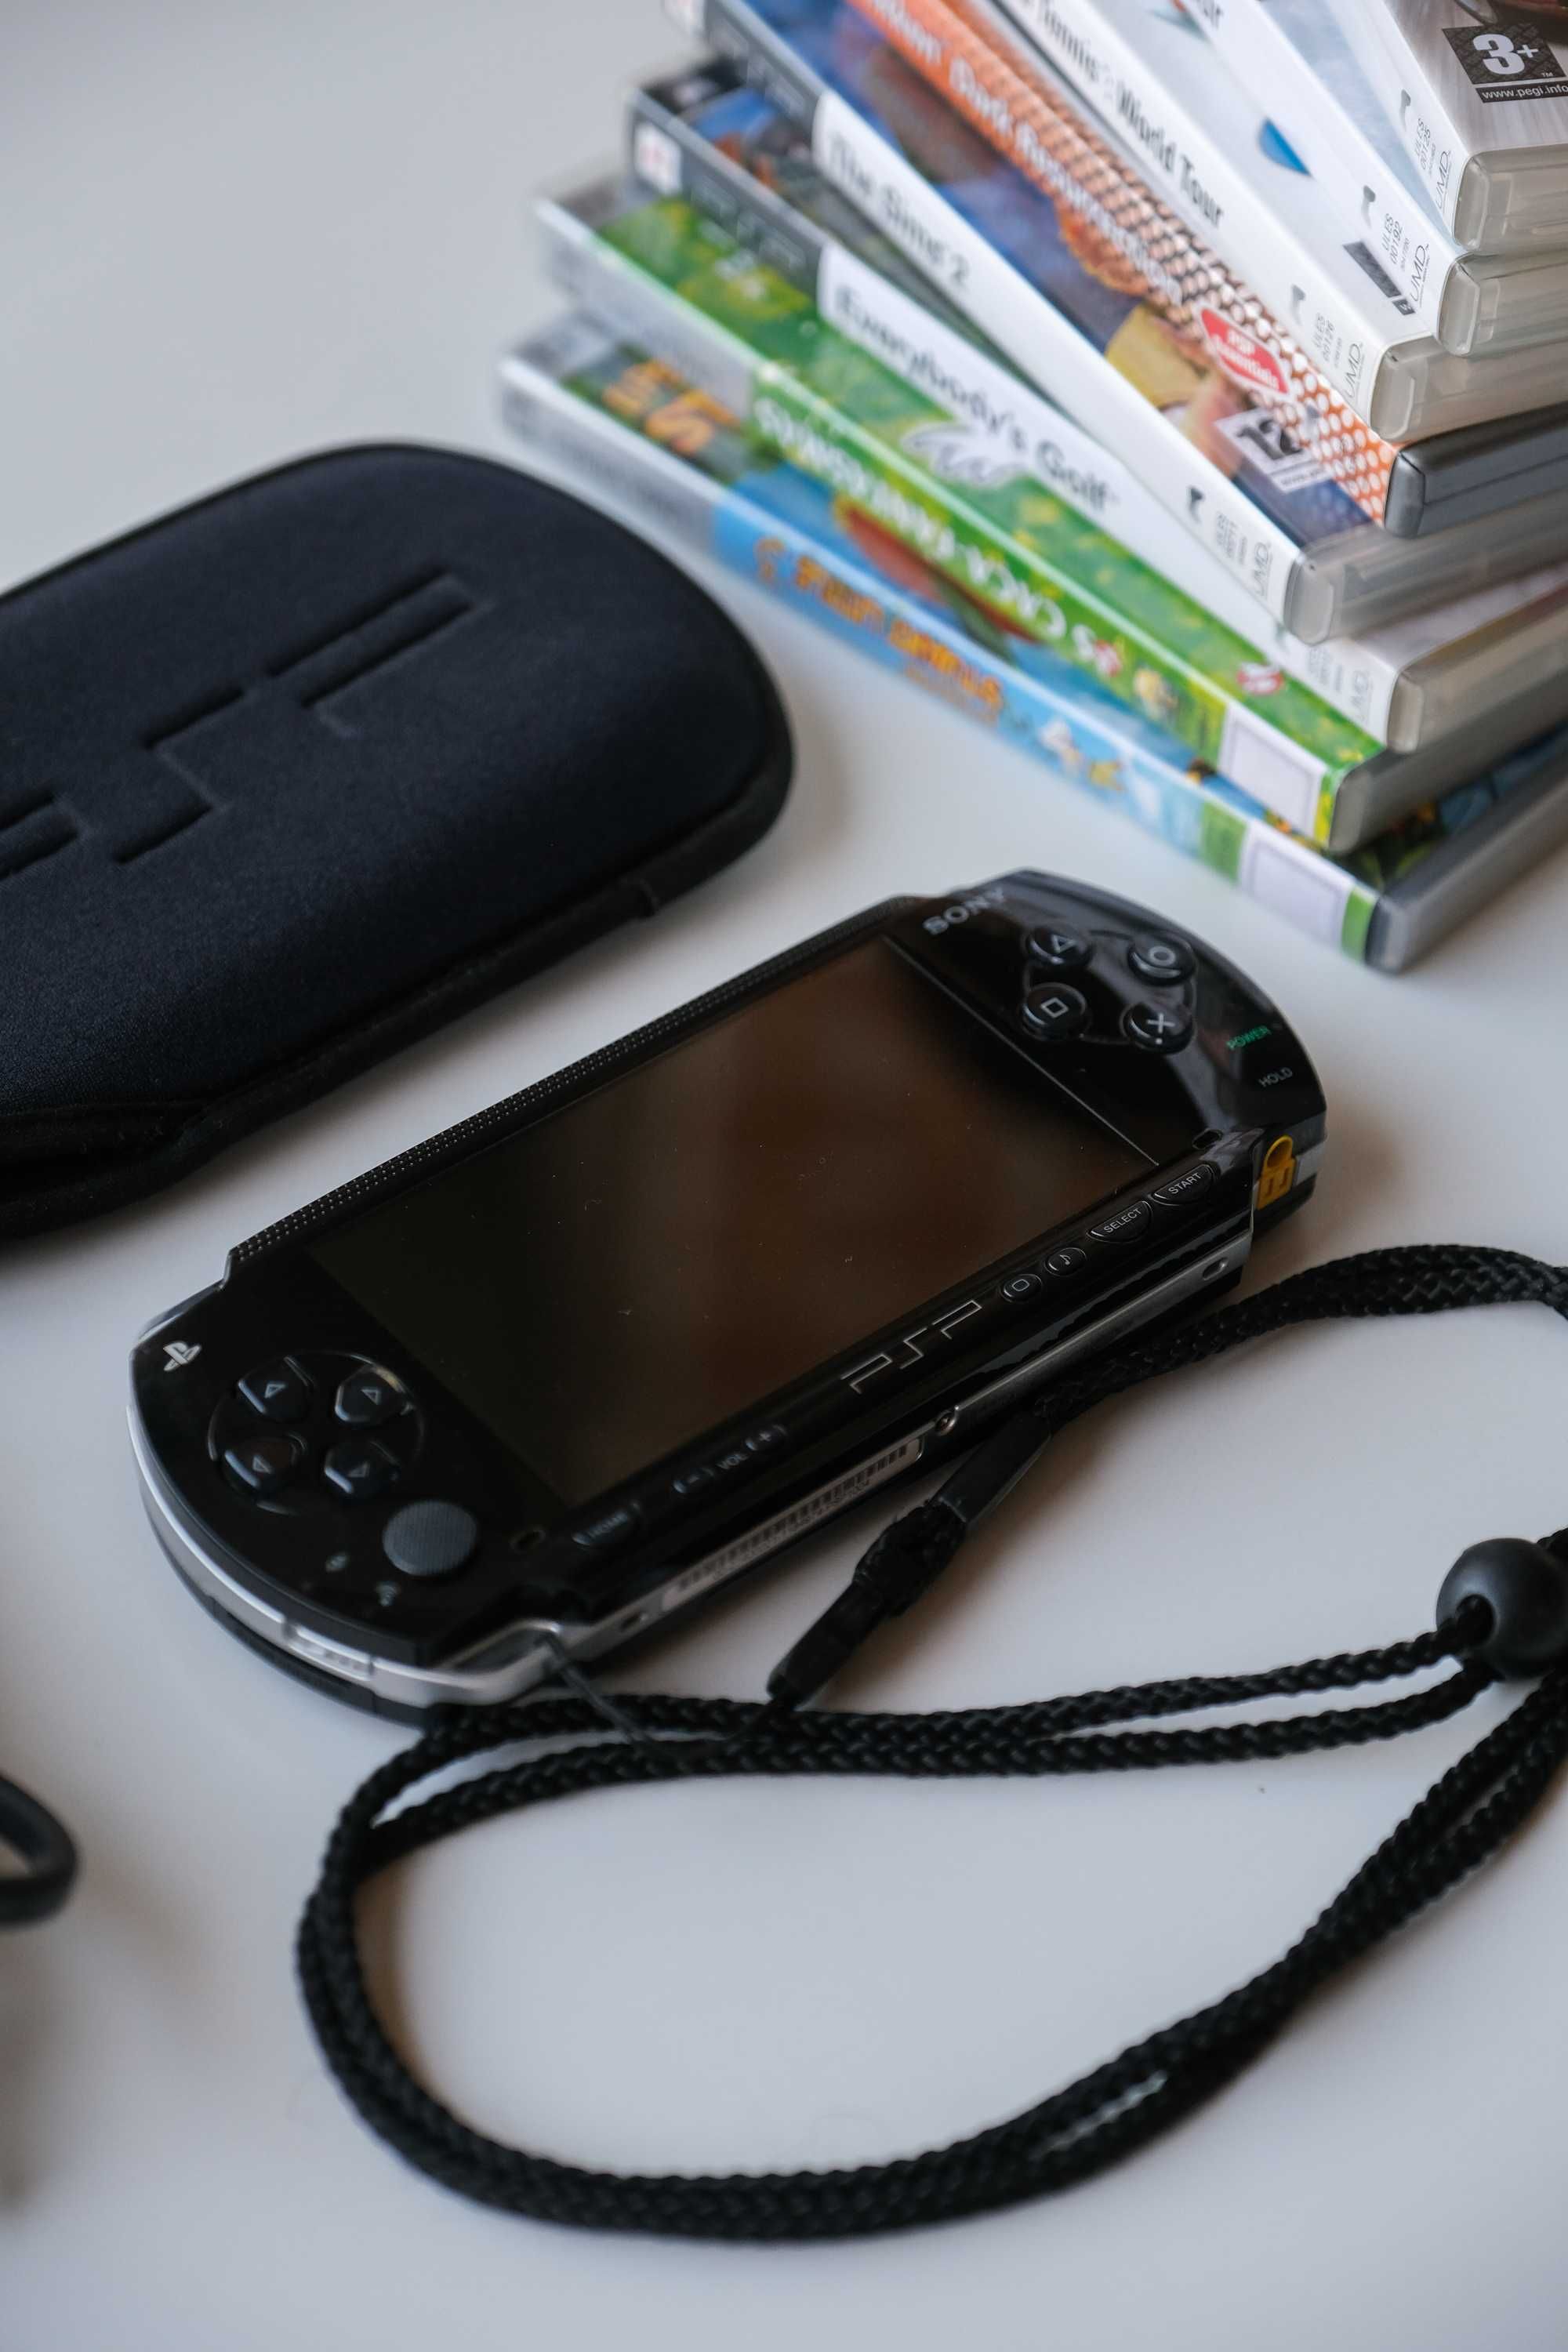 PSP - Playstation Portable